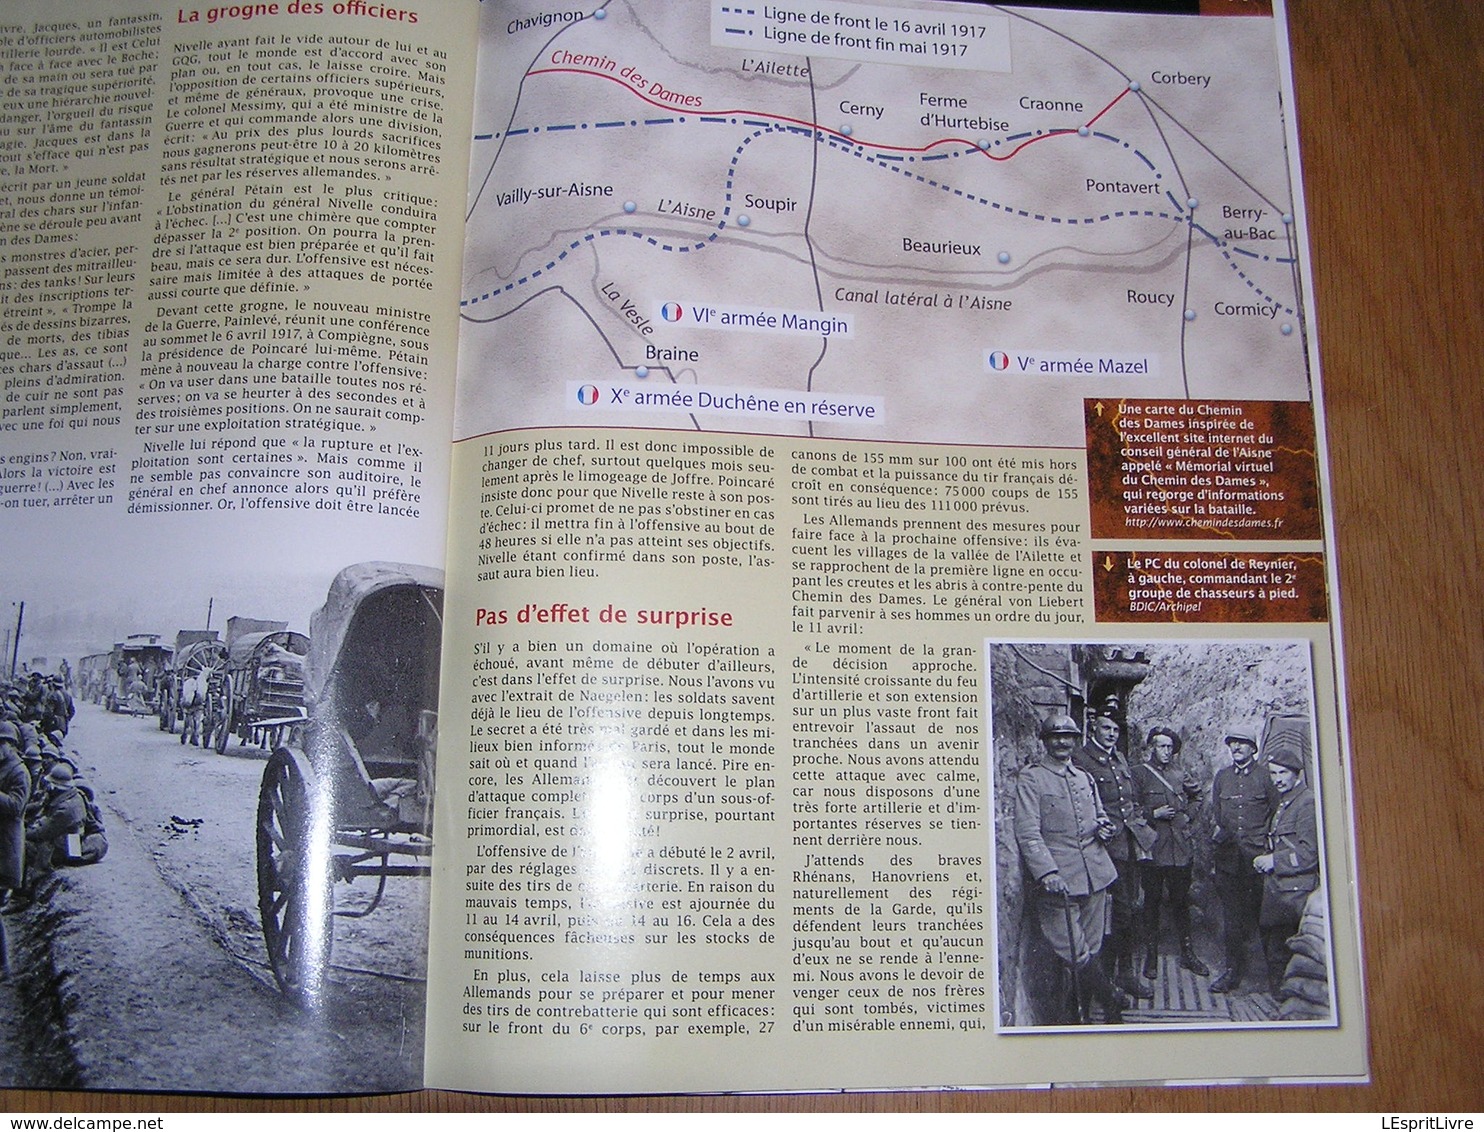 BATAILLES N° 21 Guerre 14 18 Chemin des Dames Arras Ludendorff Metz 102 è RAL Russie Tsar Nicolas Somme Ligne Hindenburg